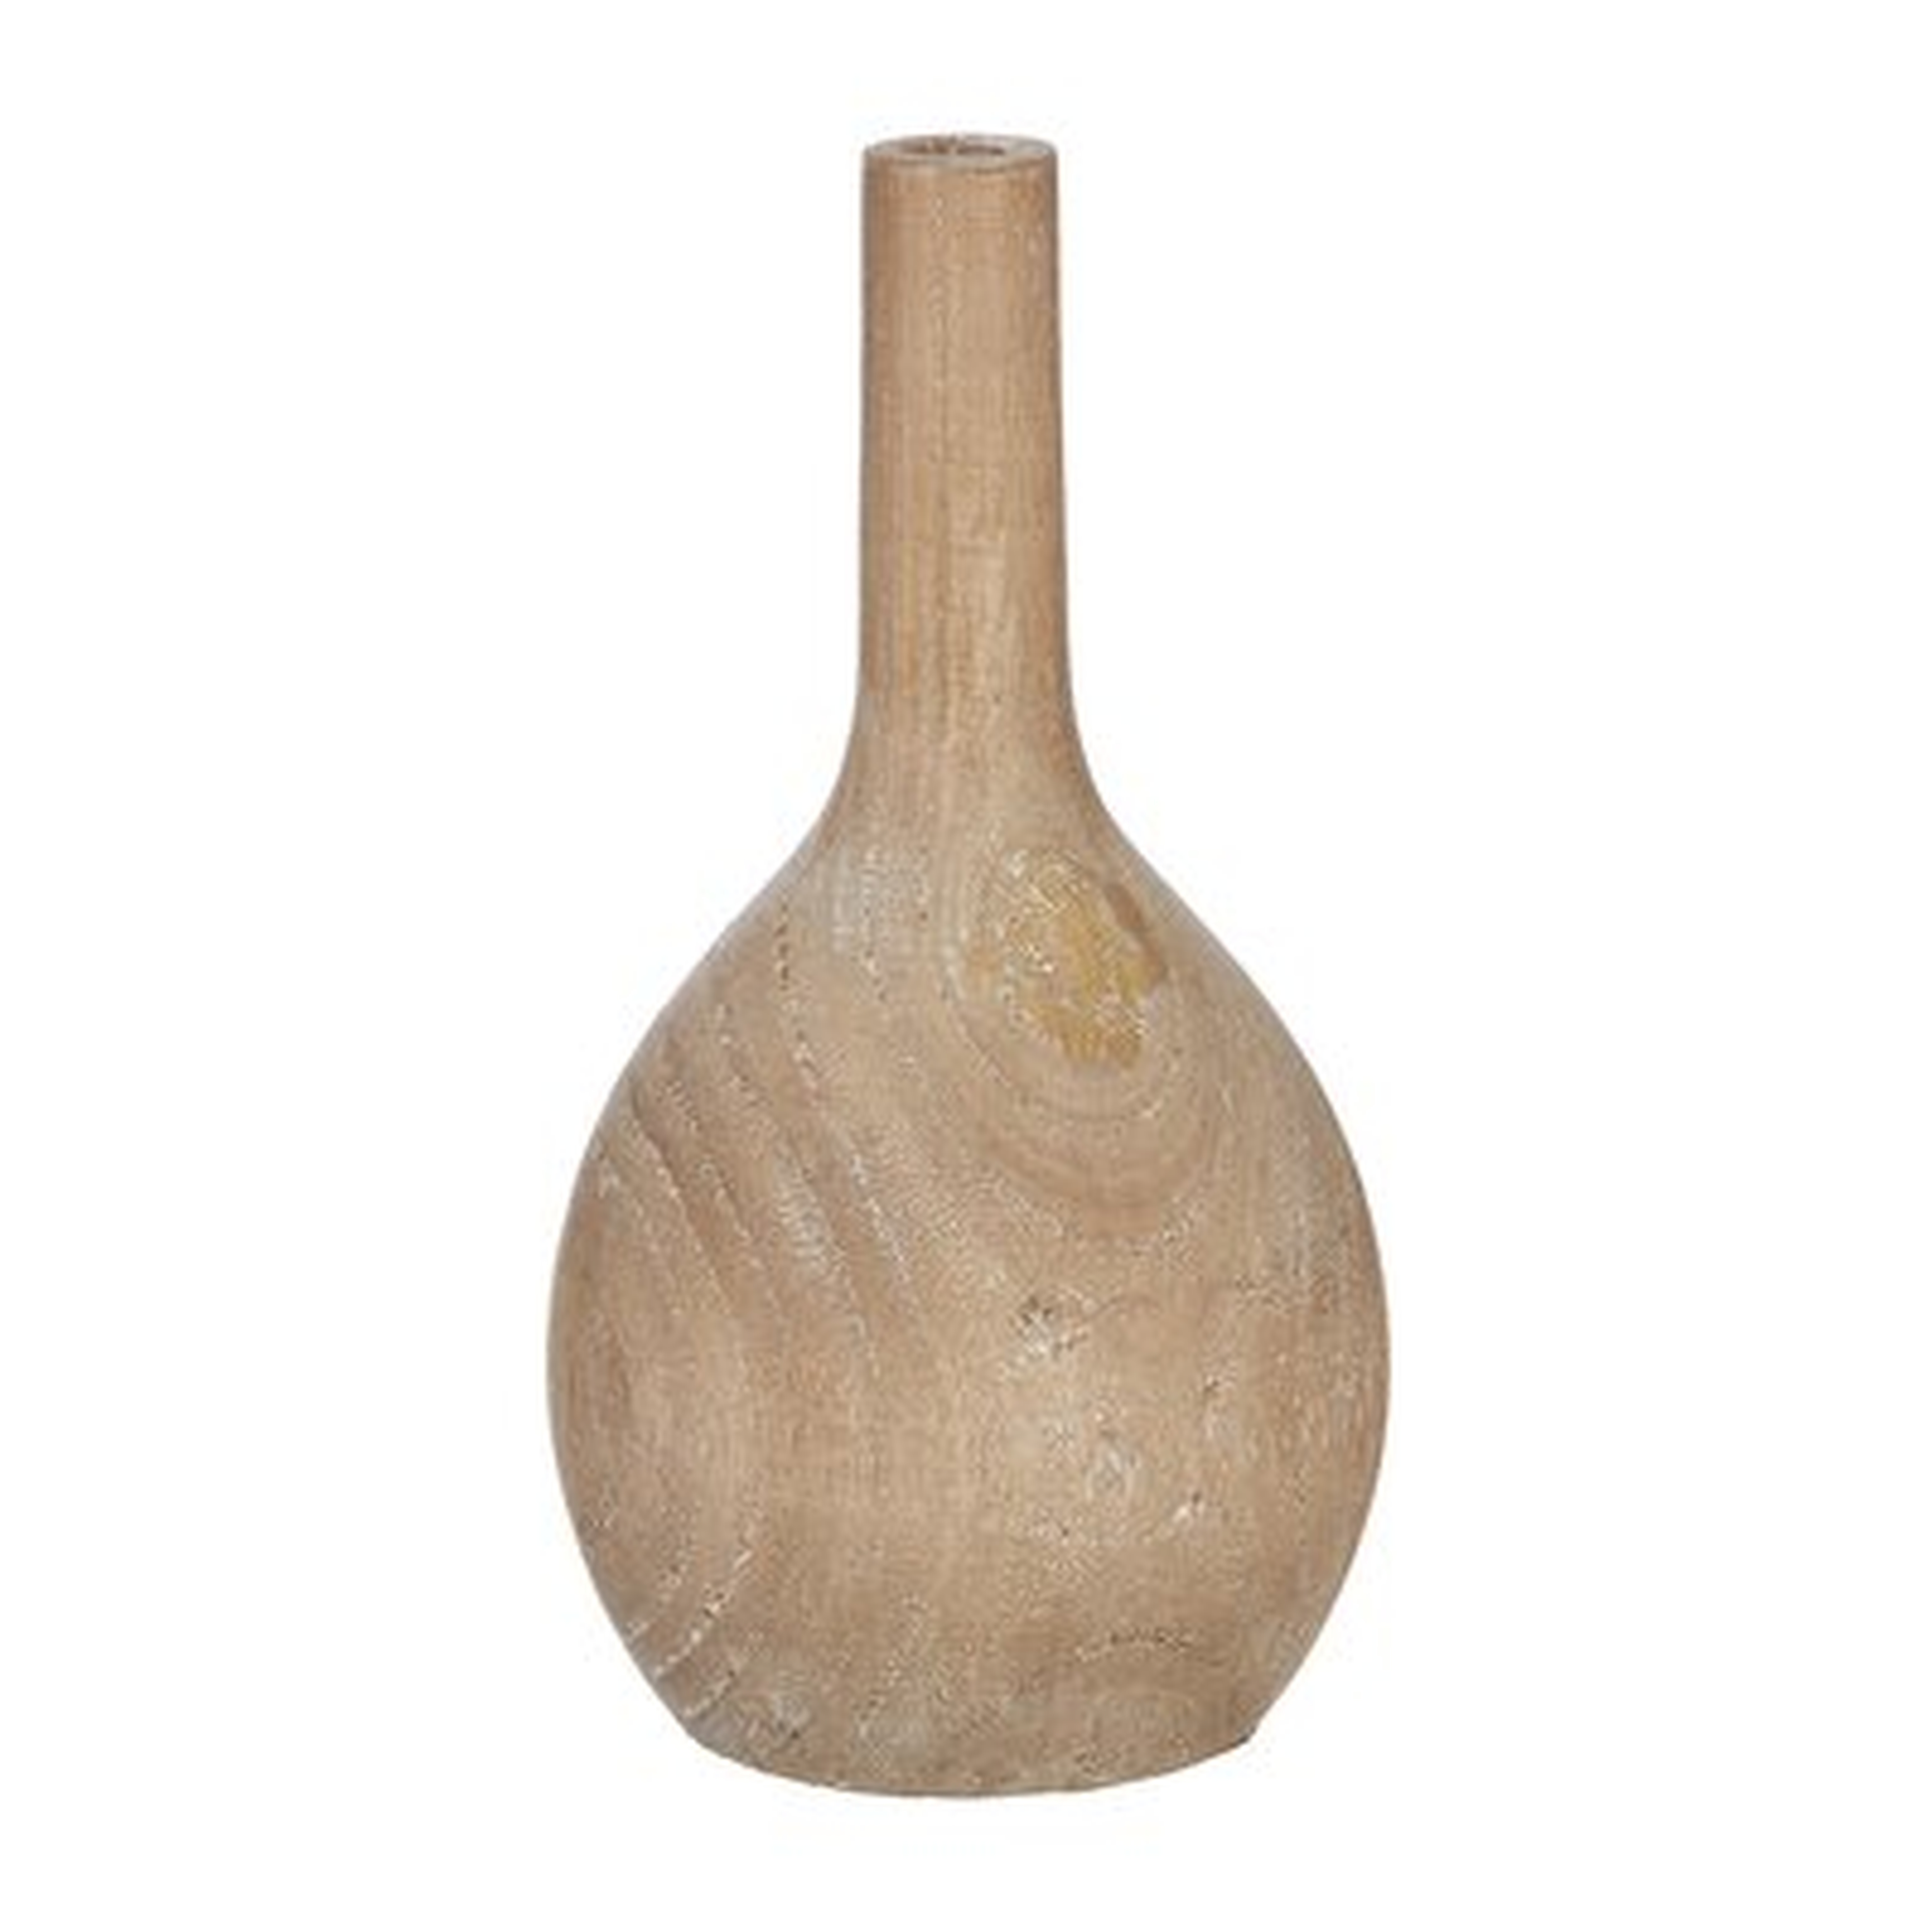 Voshell Table Vase - Wayfair